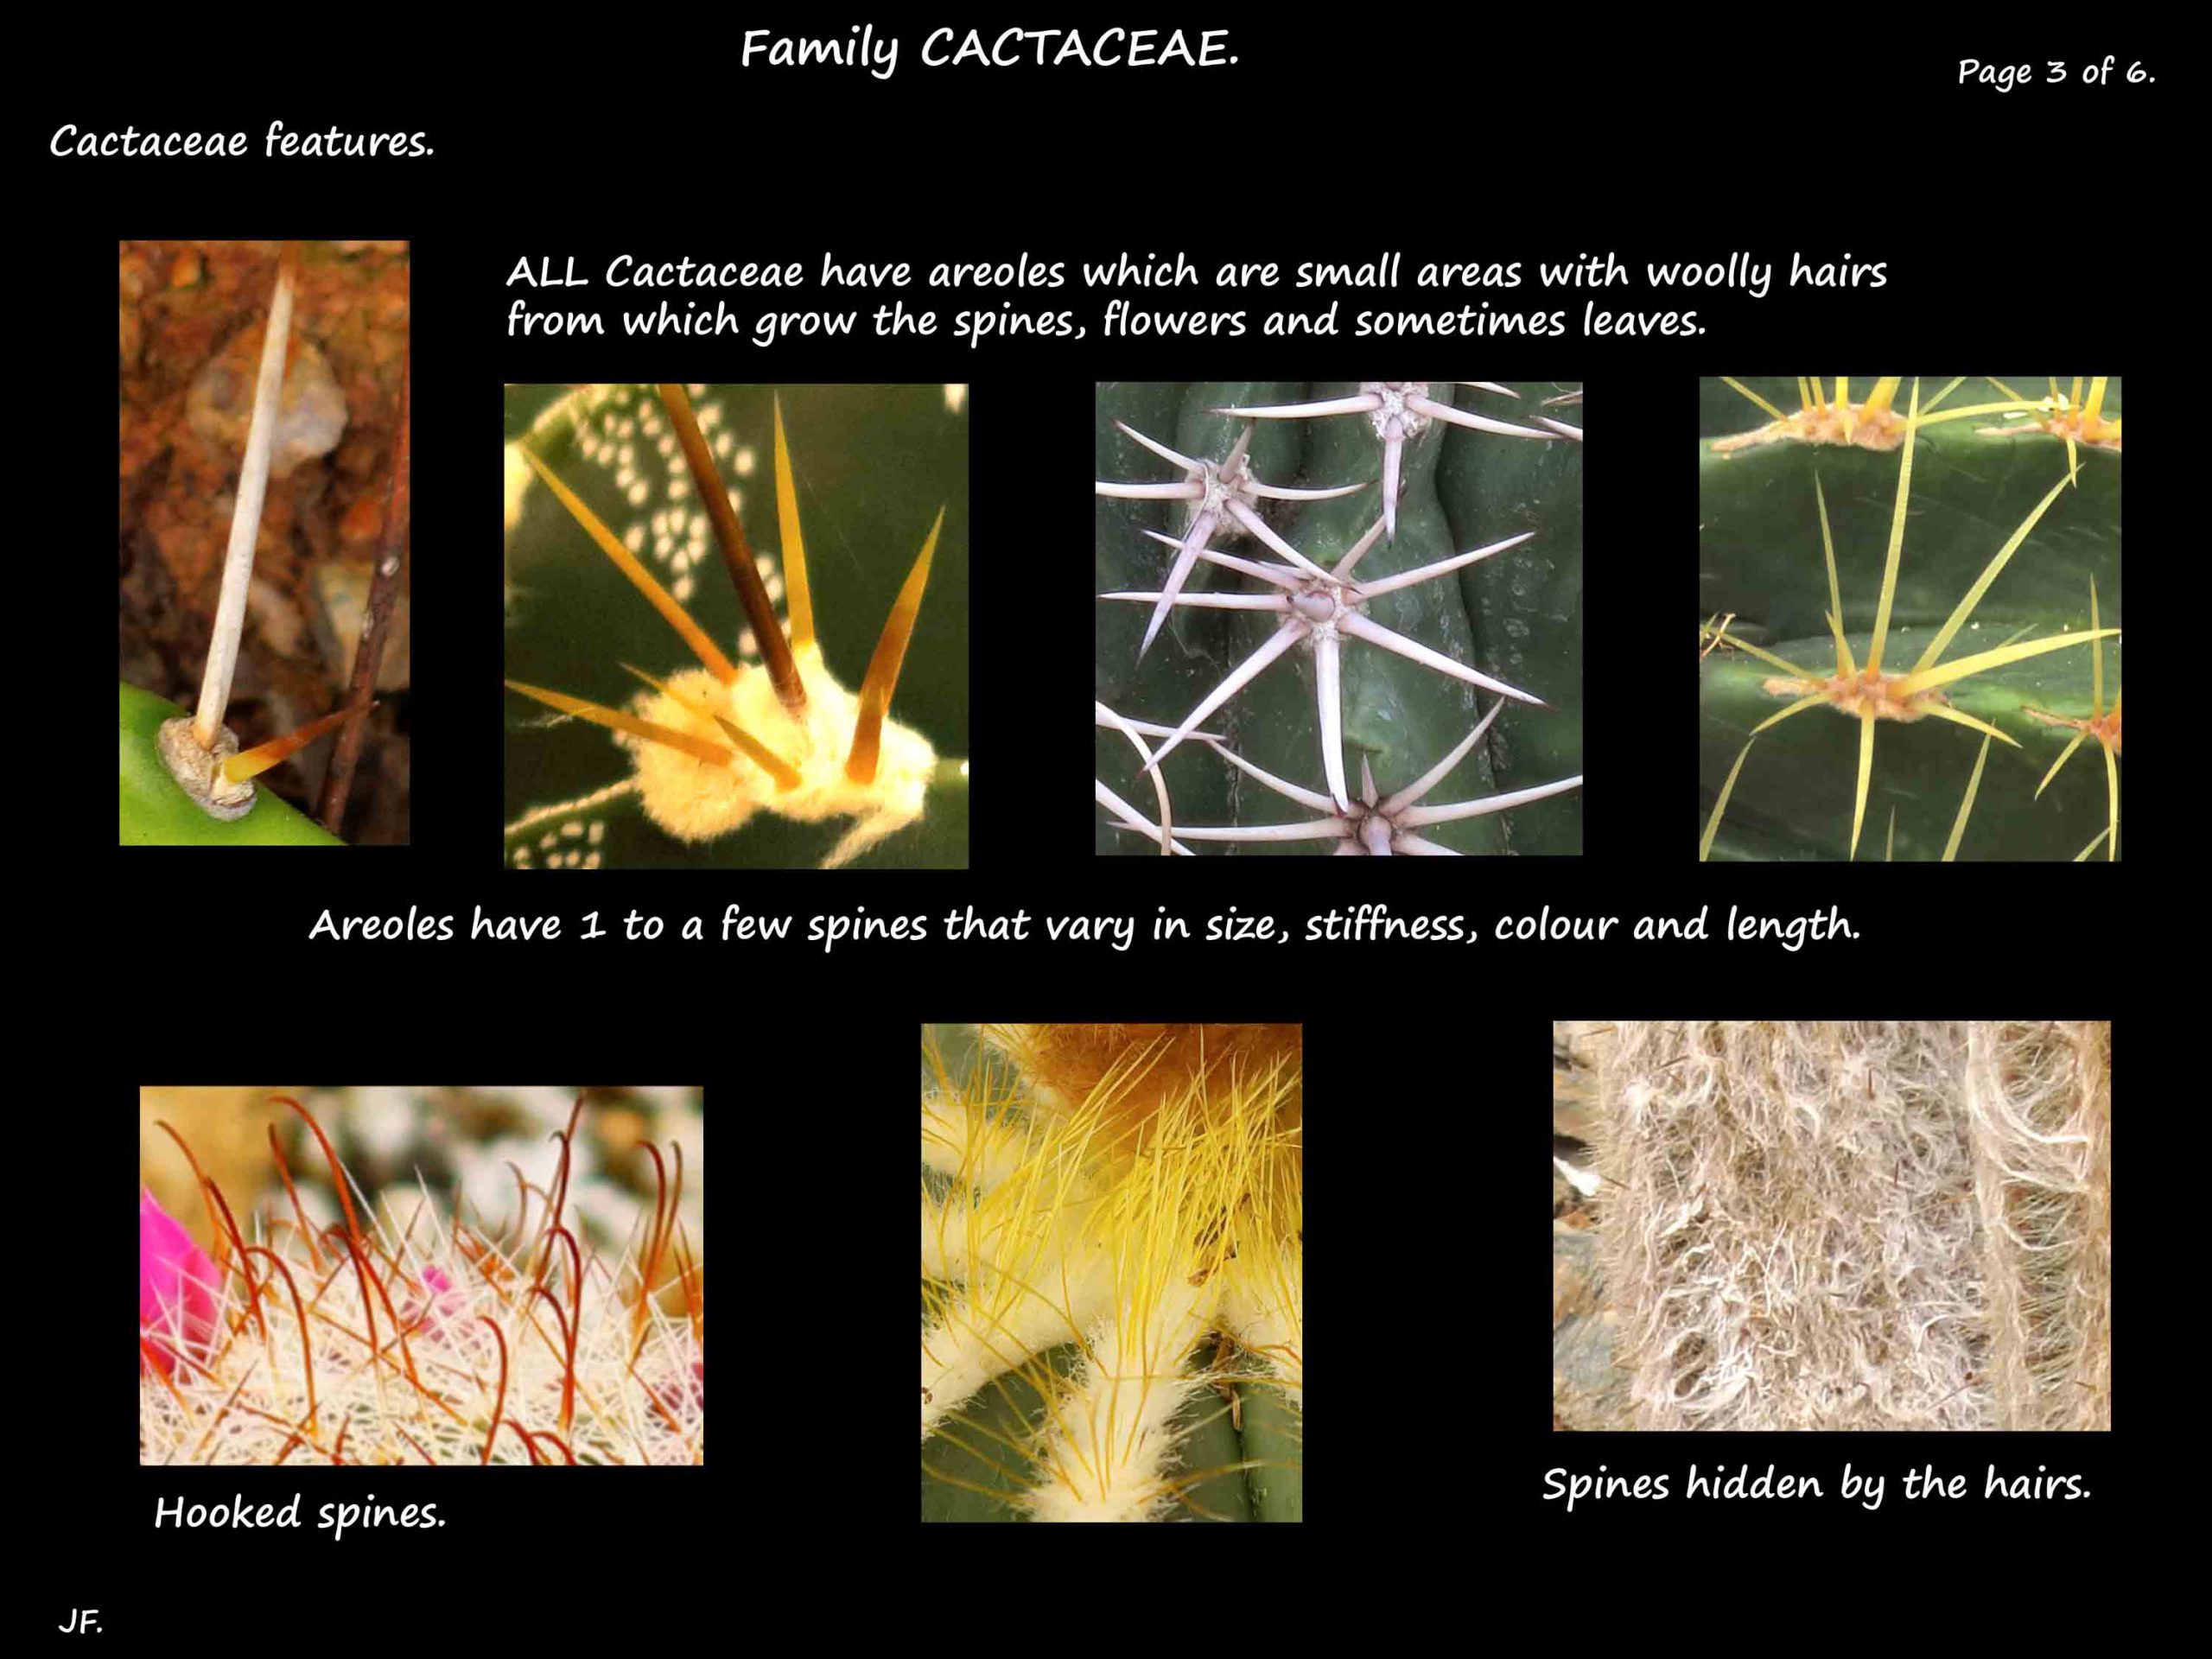 3 Cactaceae spines